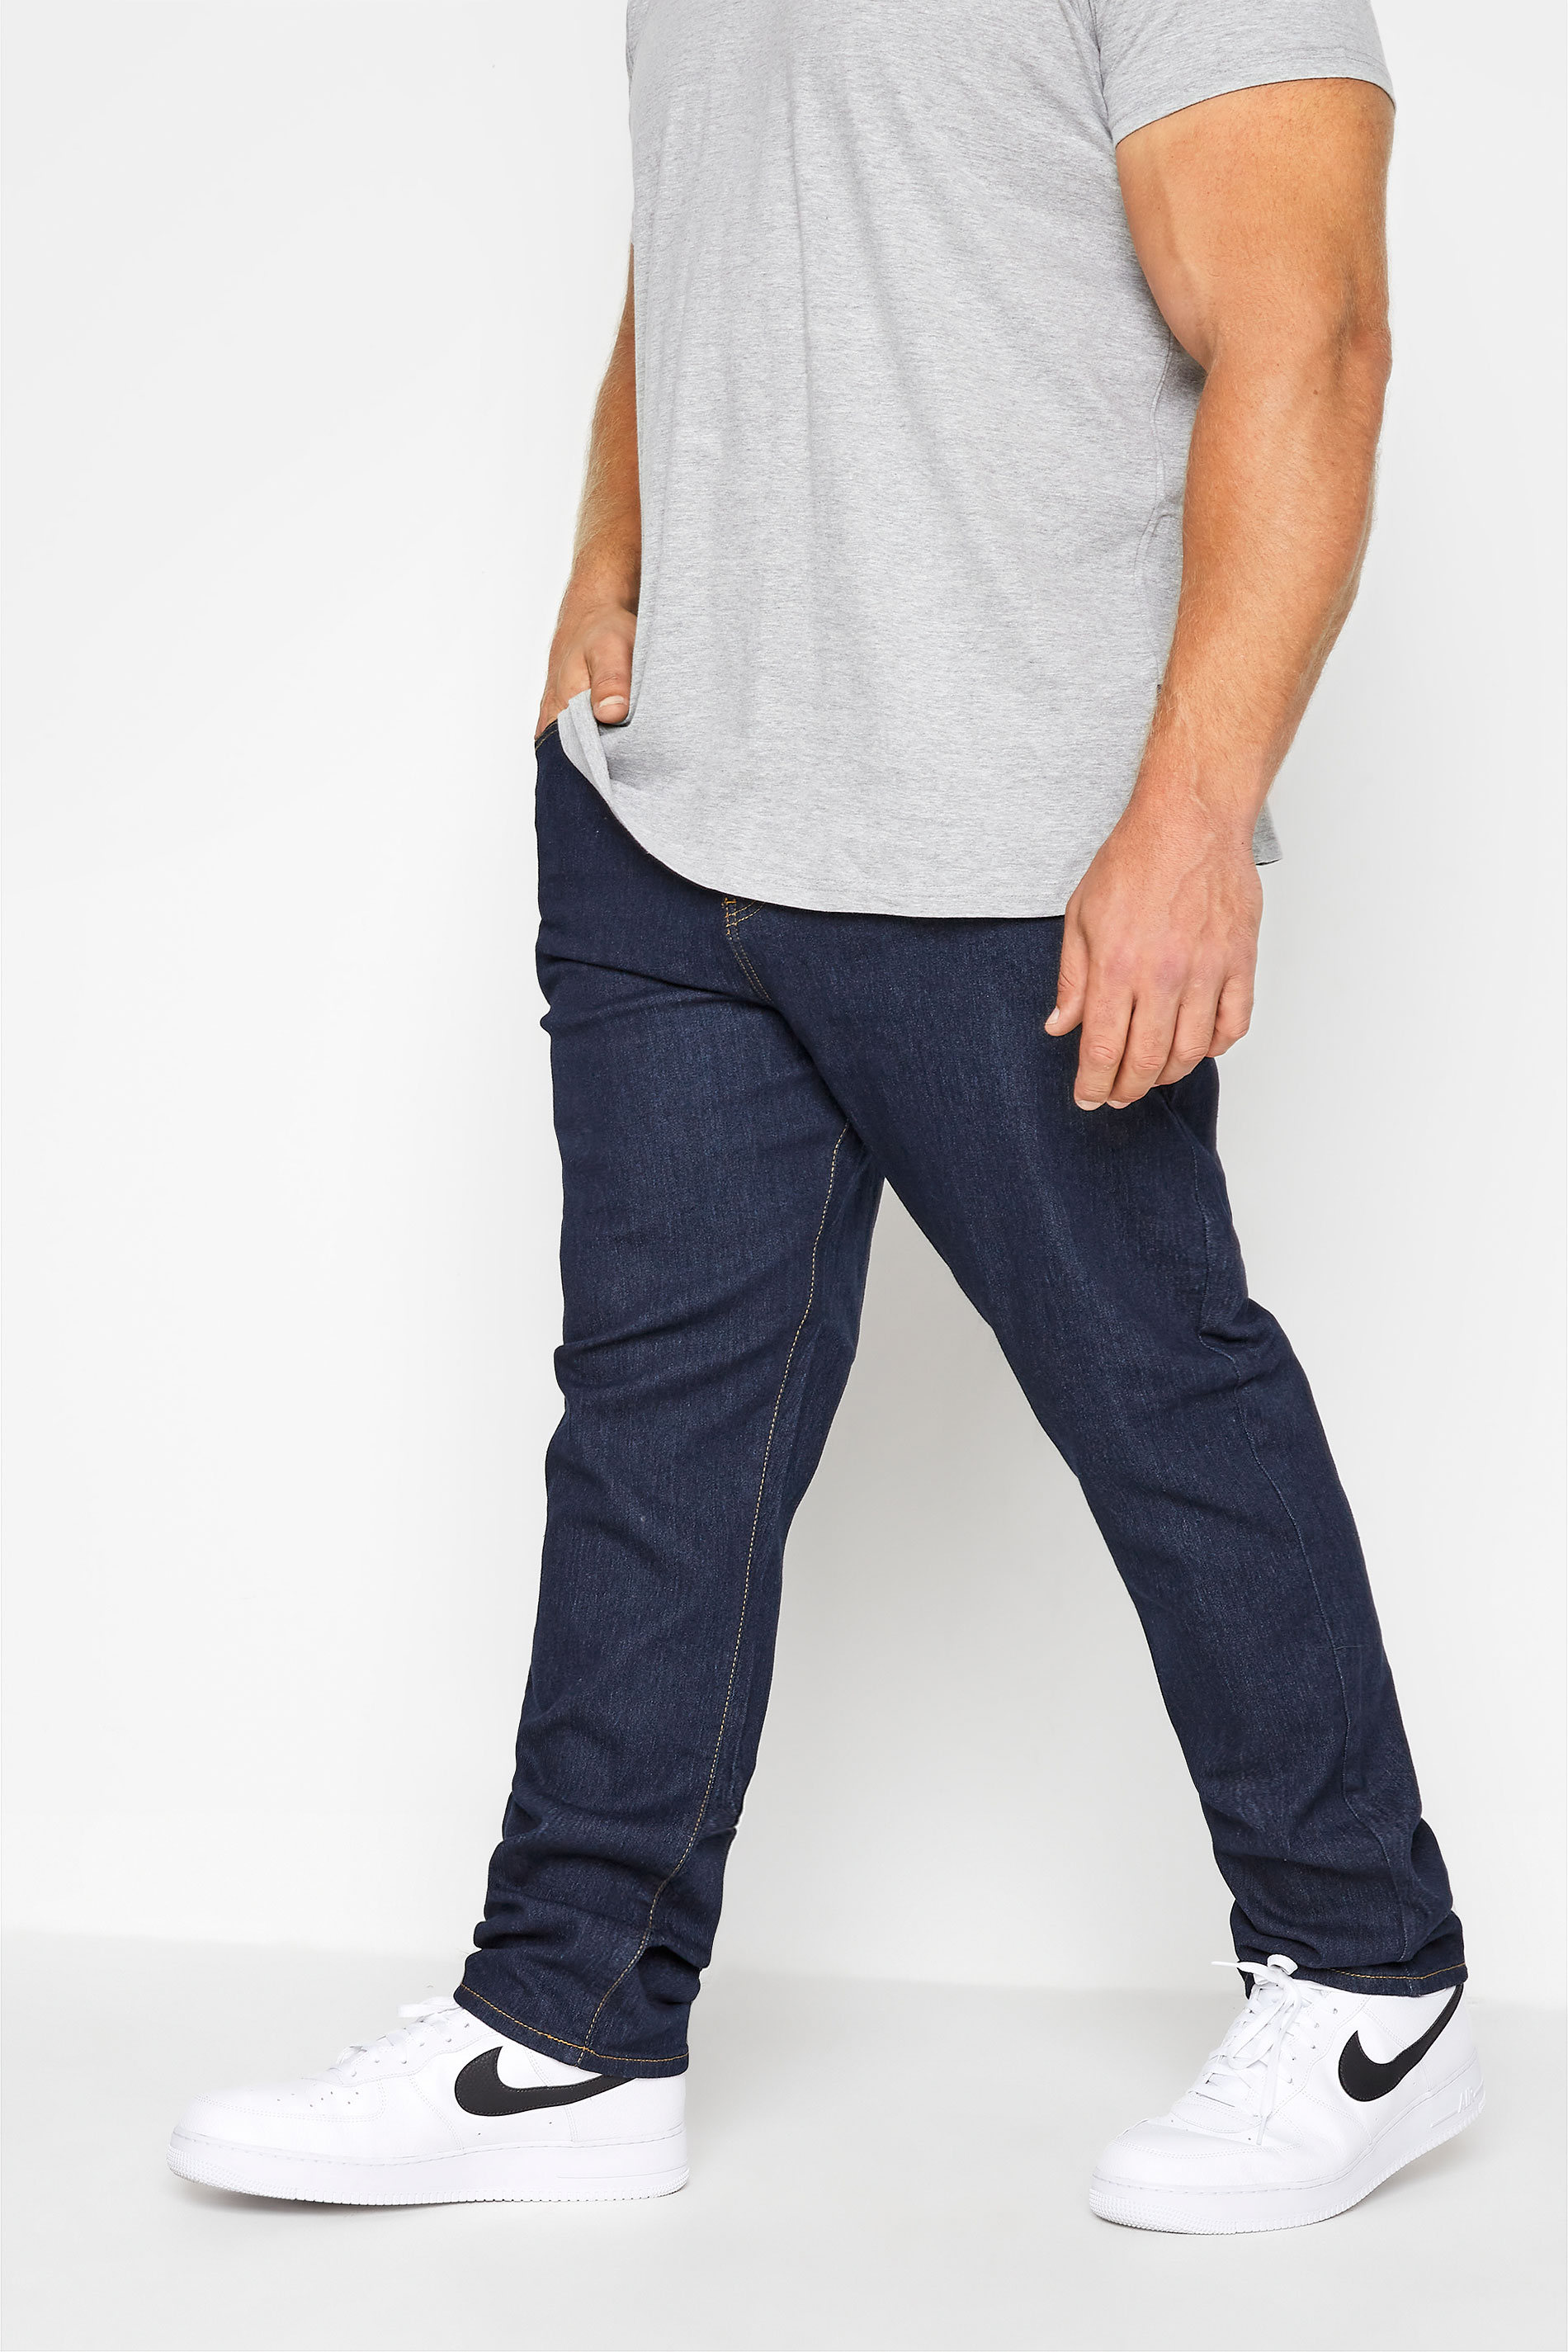 Image of Inside Leg Size 29", Waist Size 40 Mens Kam Big & Tall Indigo Blue Regular Fit Stretch Jeans Big & Tall